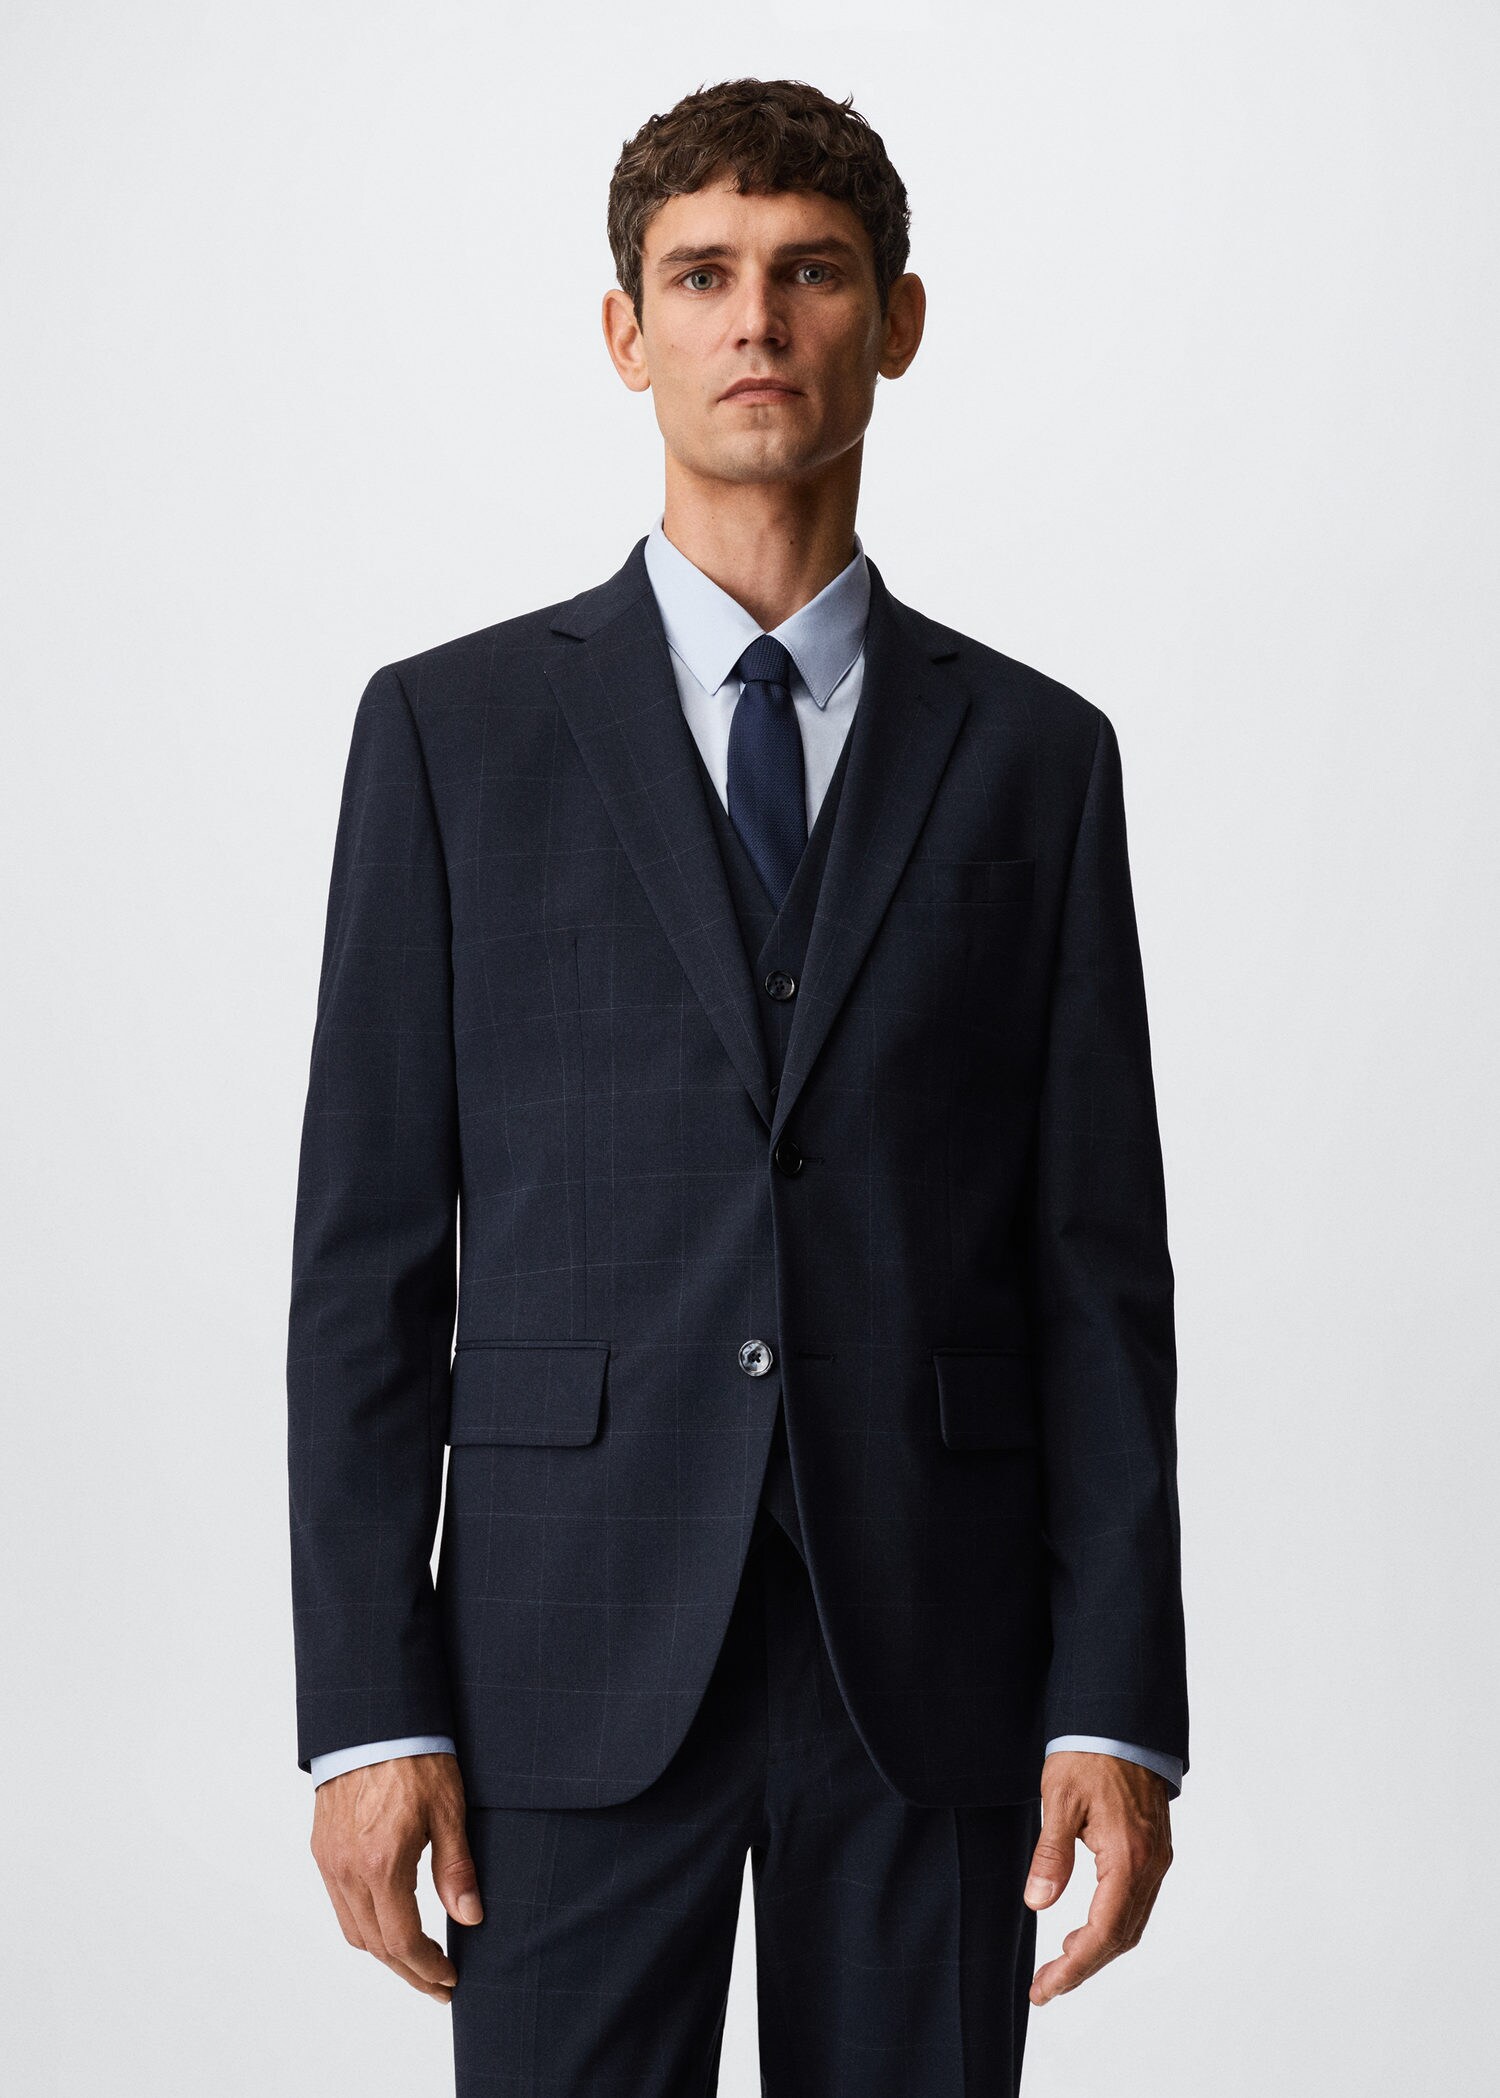 Shop Blazer & Suit Collection - Blazers for Men Online at M&S India